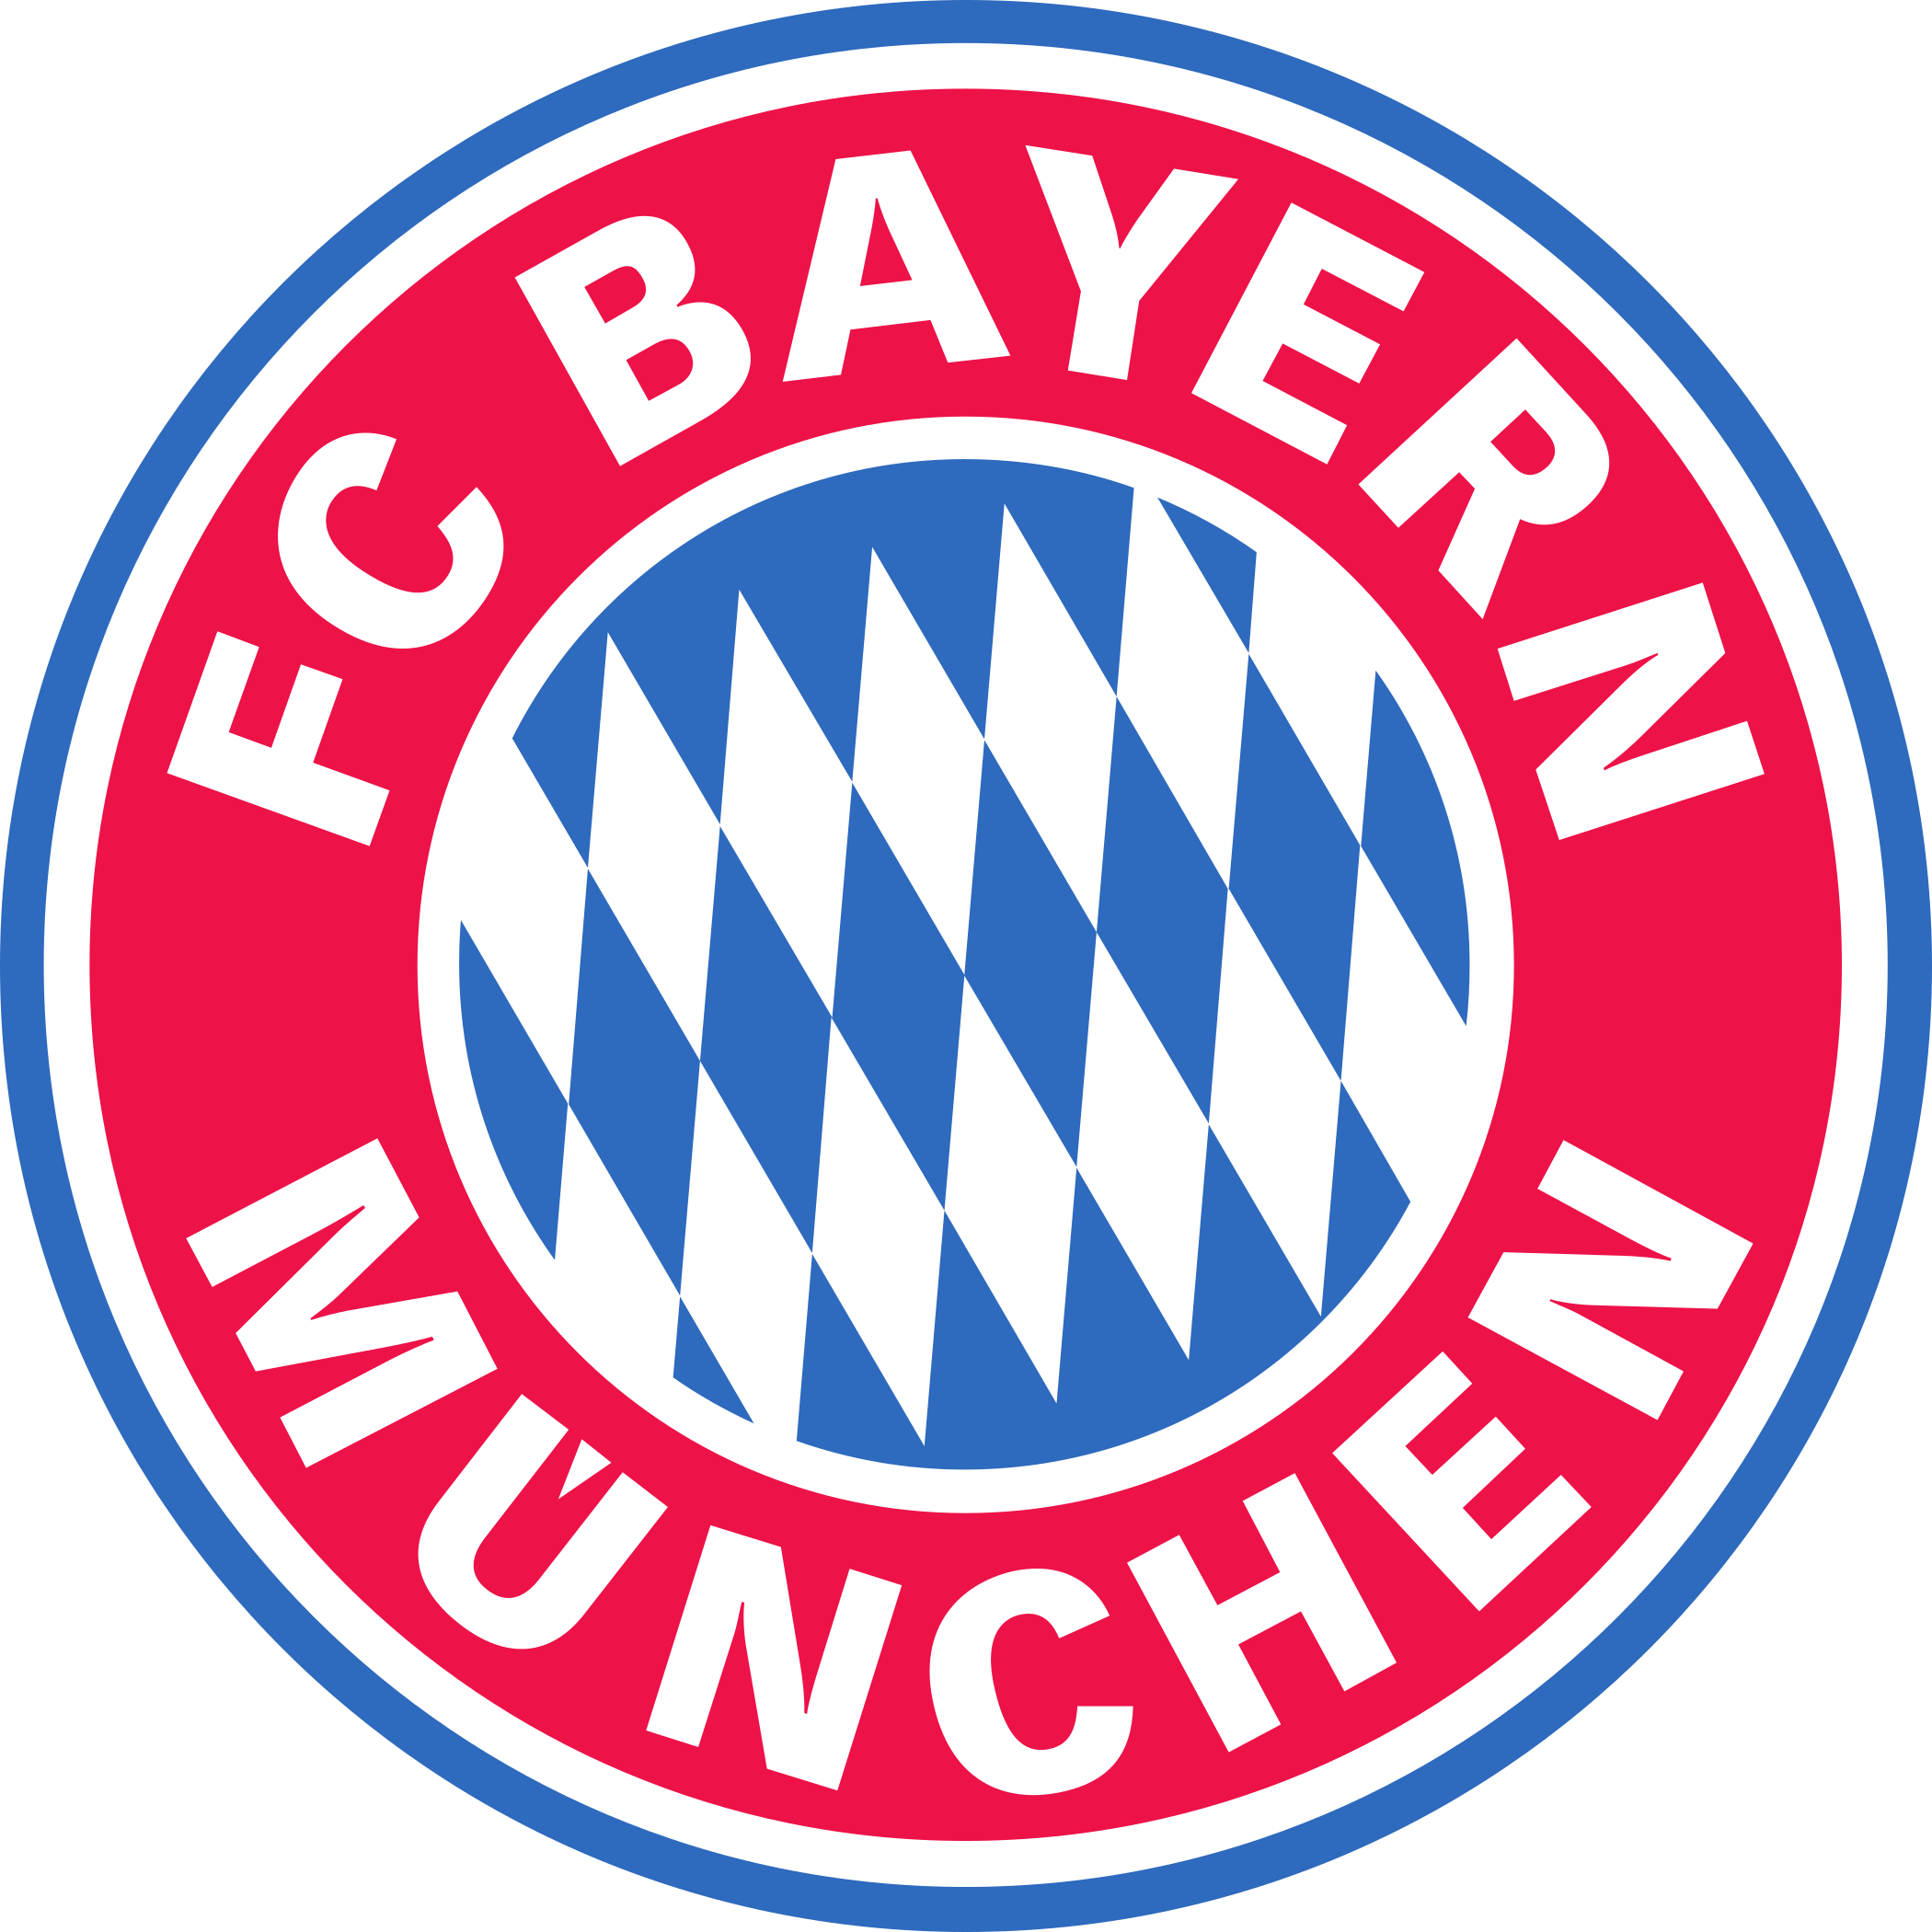 Bayern Munchen munique logo, escudo.